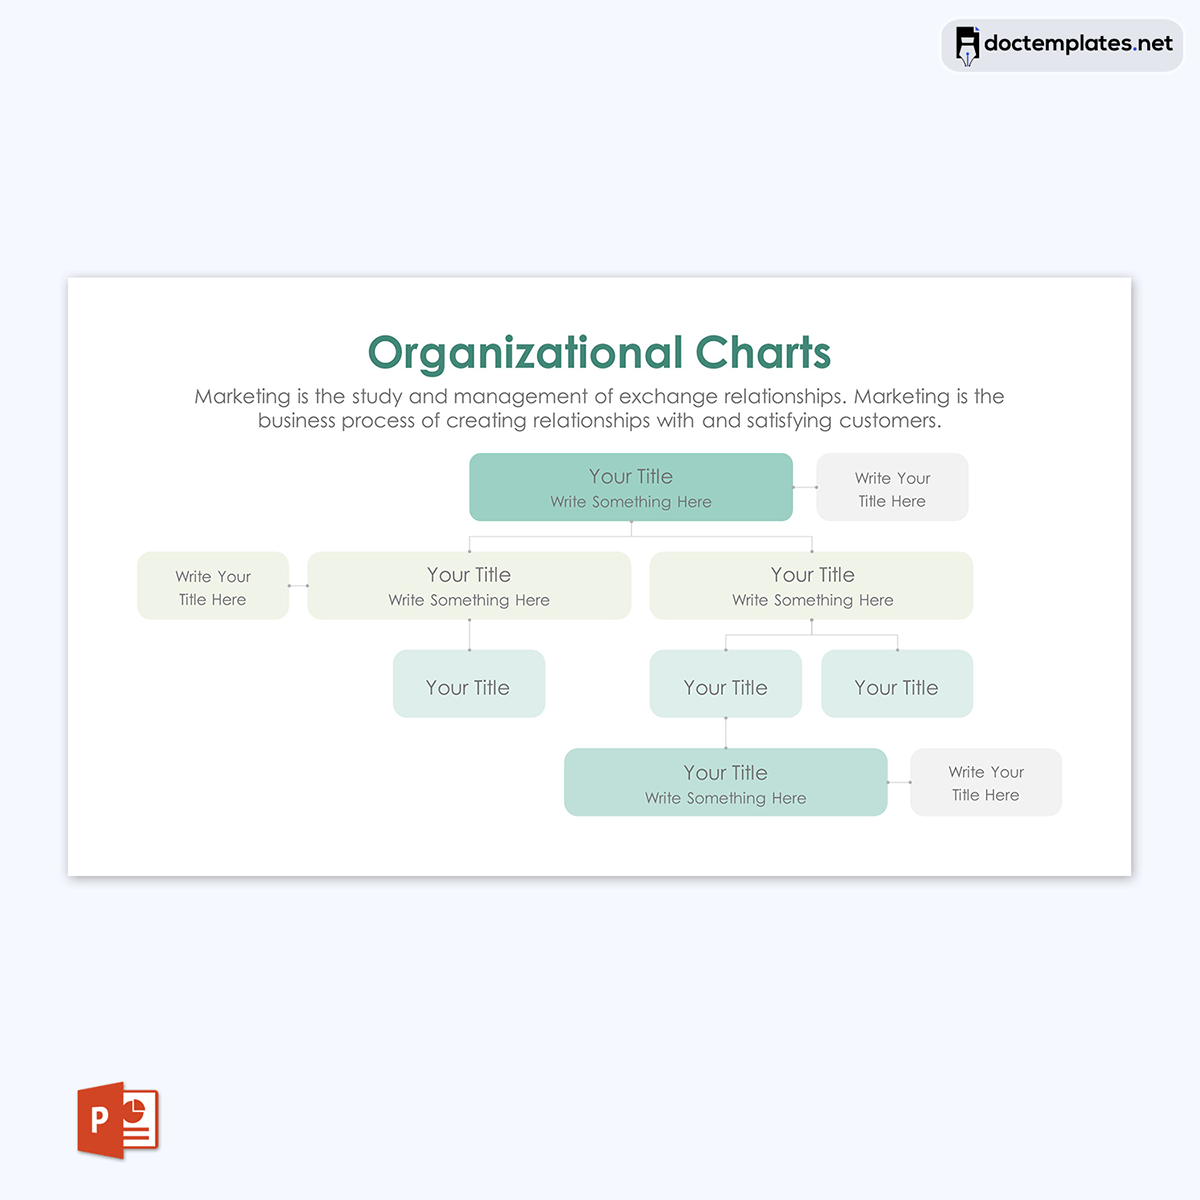 
visio organization chart templates
